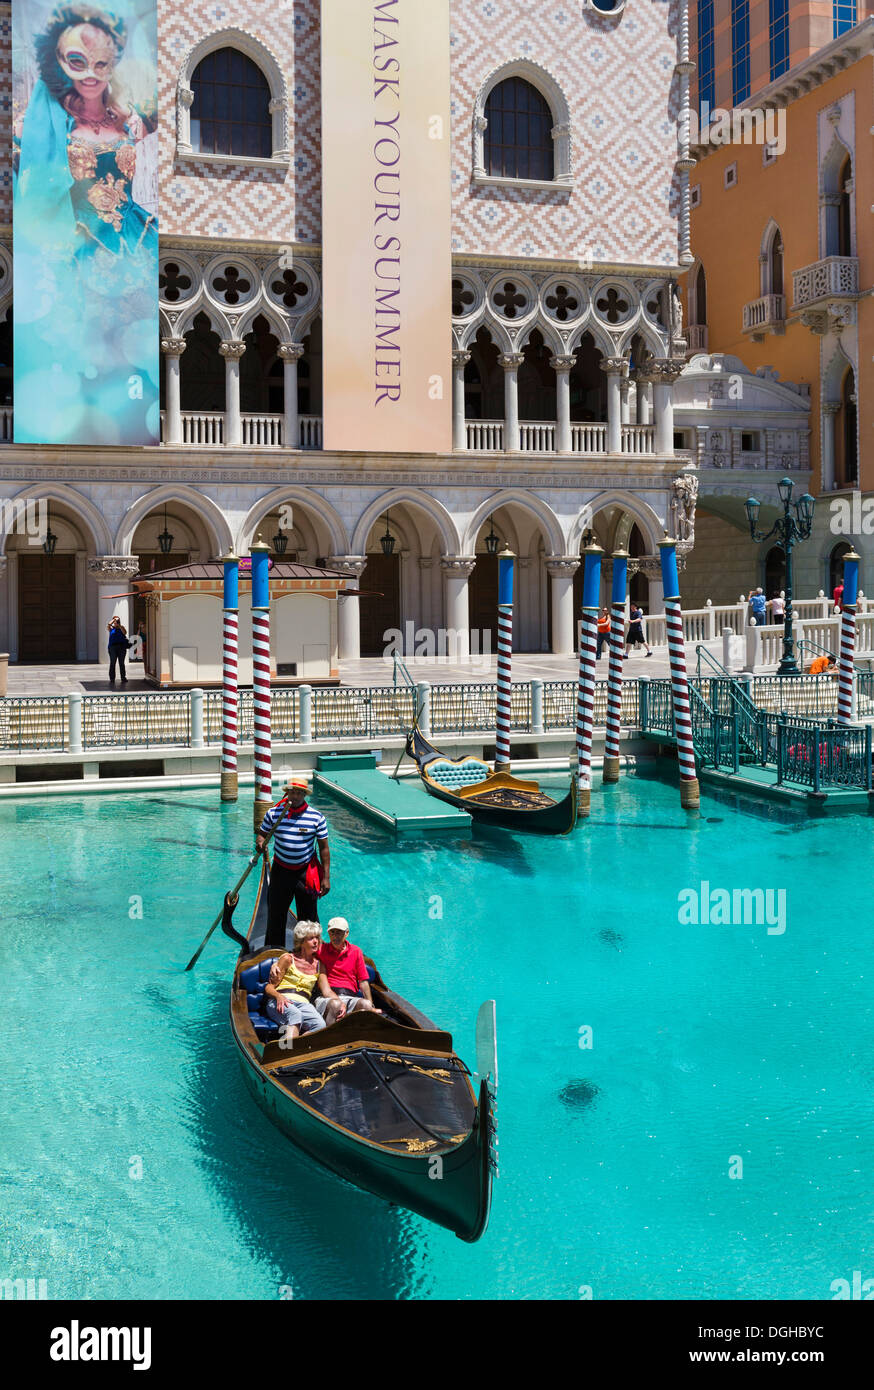 Gondola on the Grand Canal at the Venetian hotel and casino, Las Vegas Boulevard South, Las Vegas, Nevada, USA Stock Photo